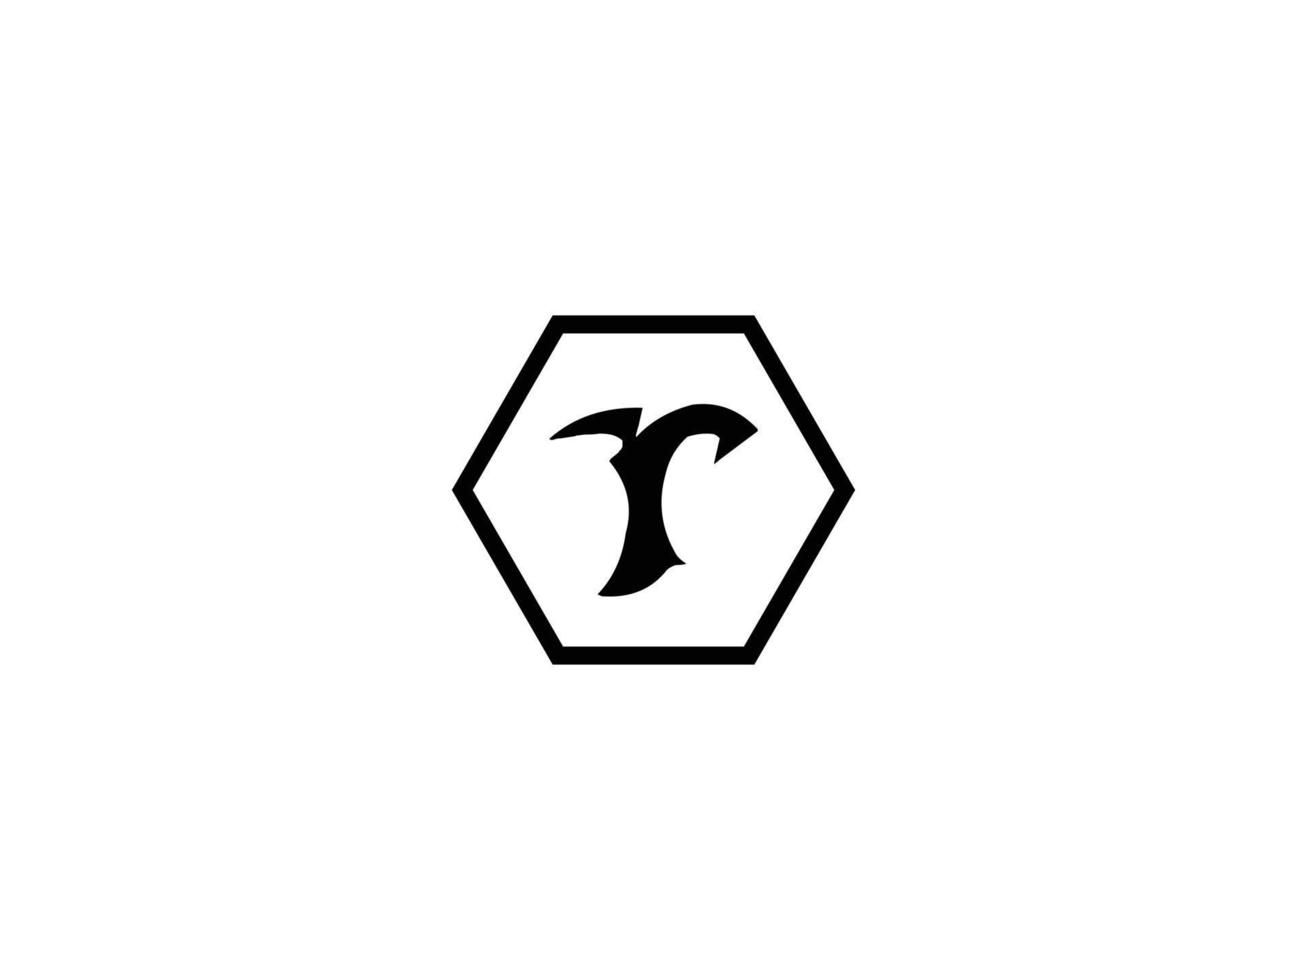 ragnatela lettera r logo design vettore